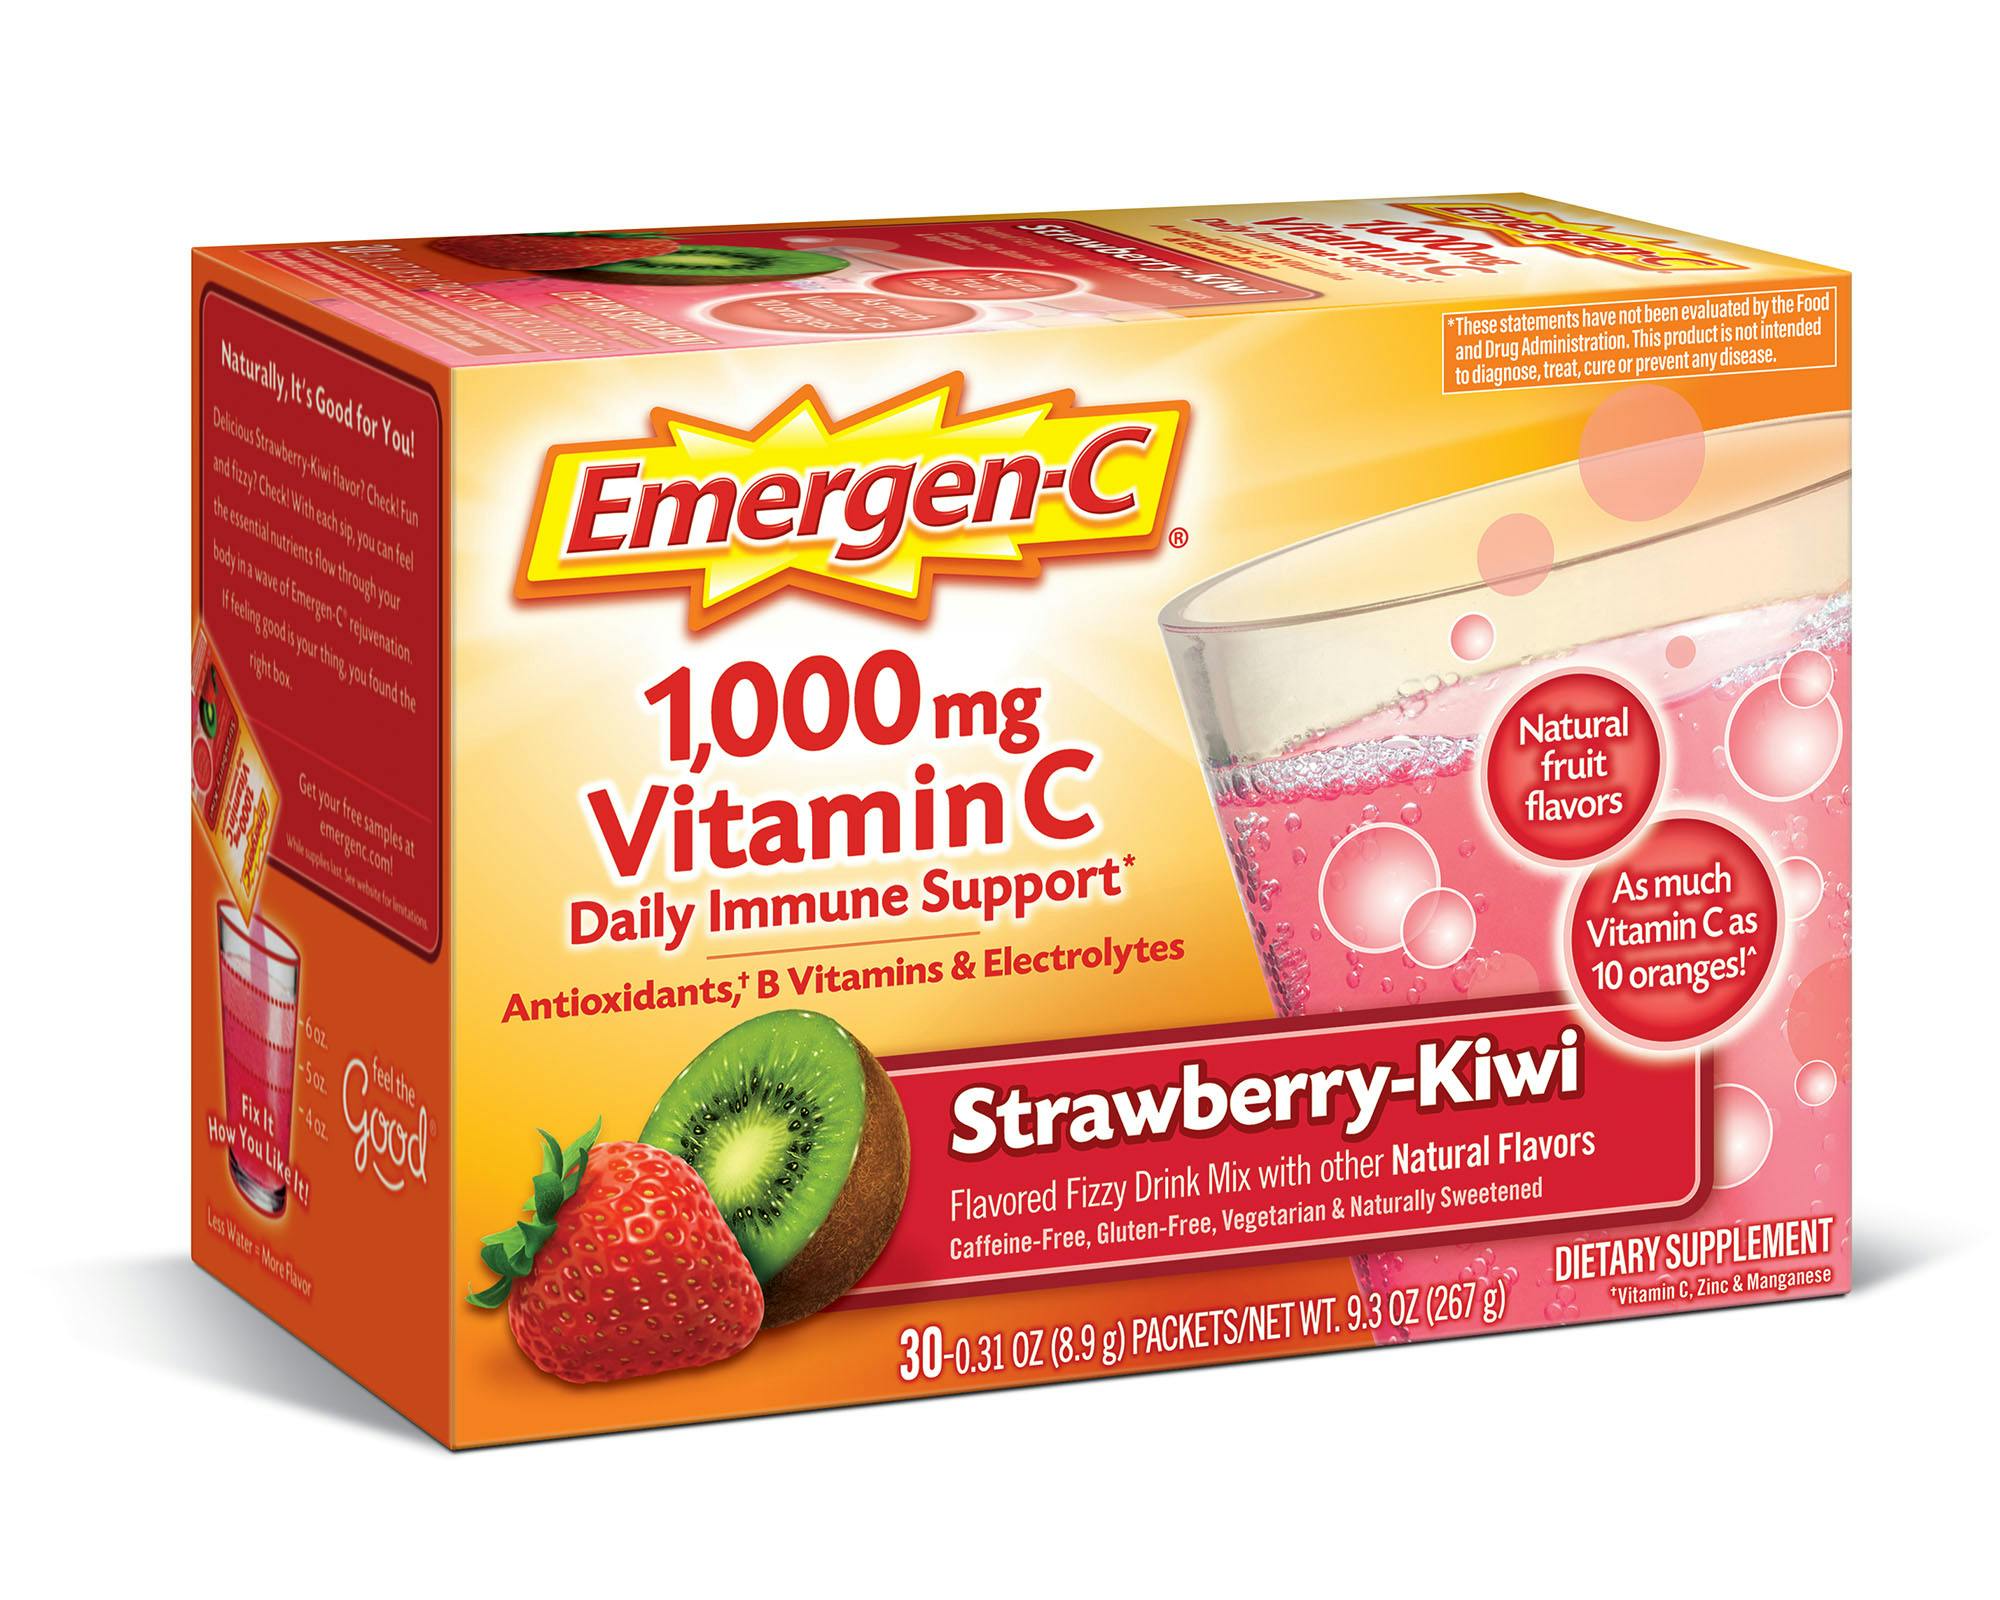 Strawberry-Kiwi Original Immune Support box angled view